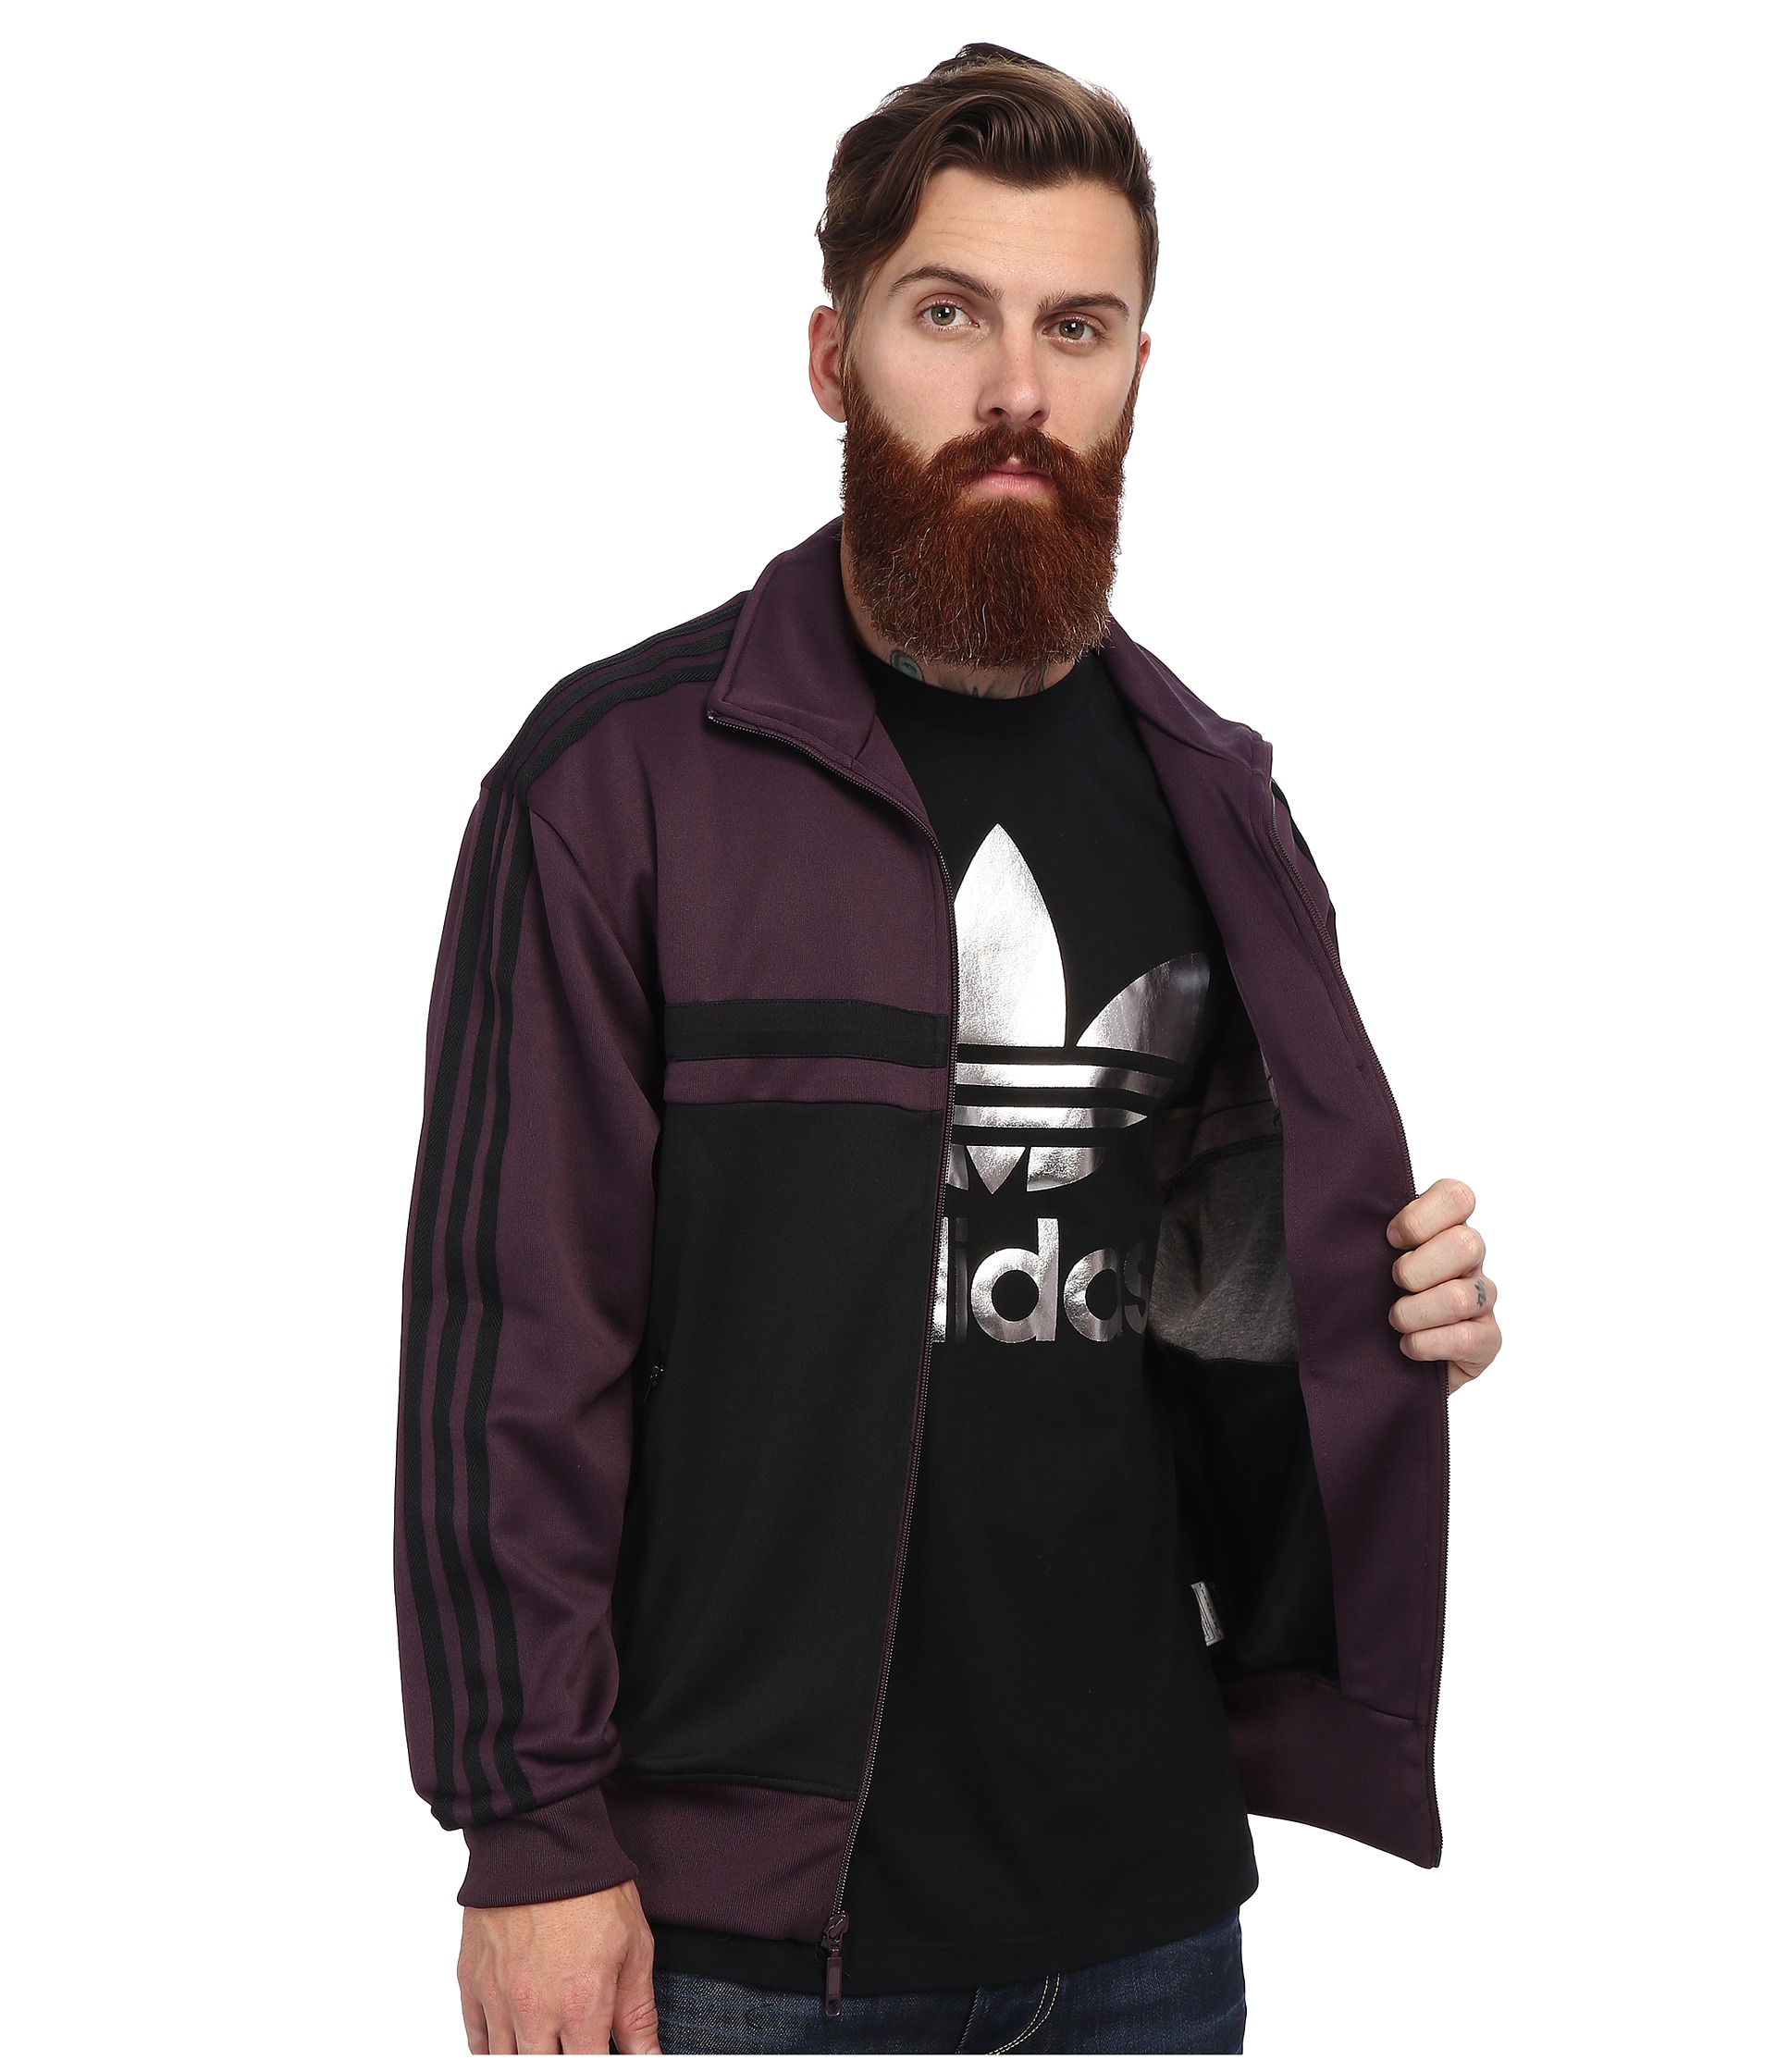 Adidas Originals Adi Icon Track Top | Shipped Free at Zappos